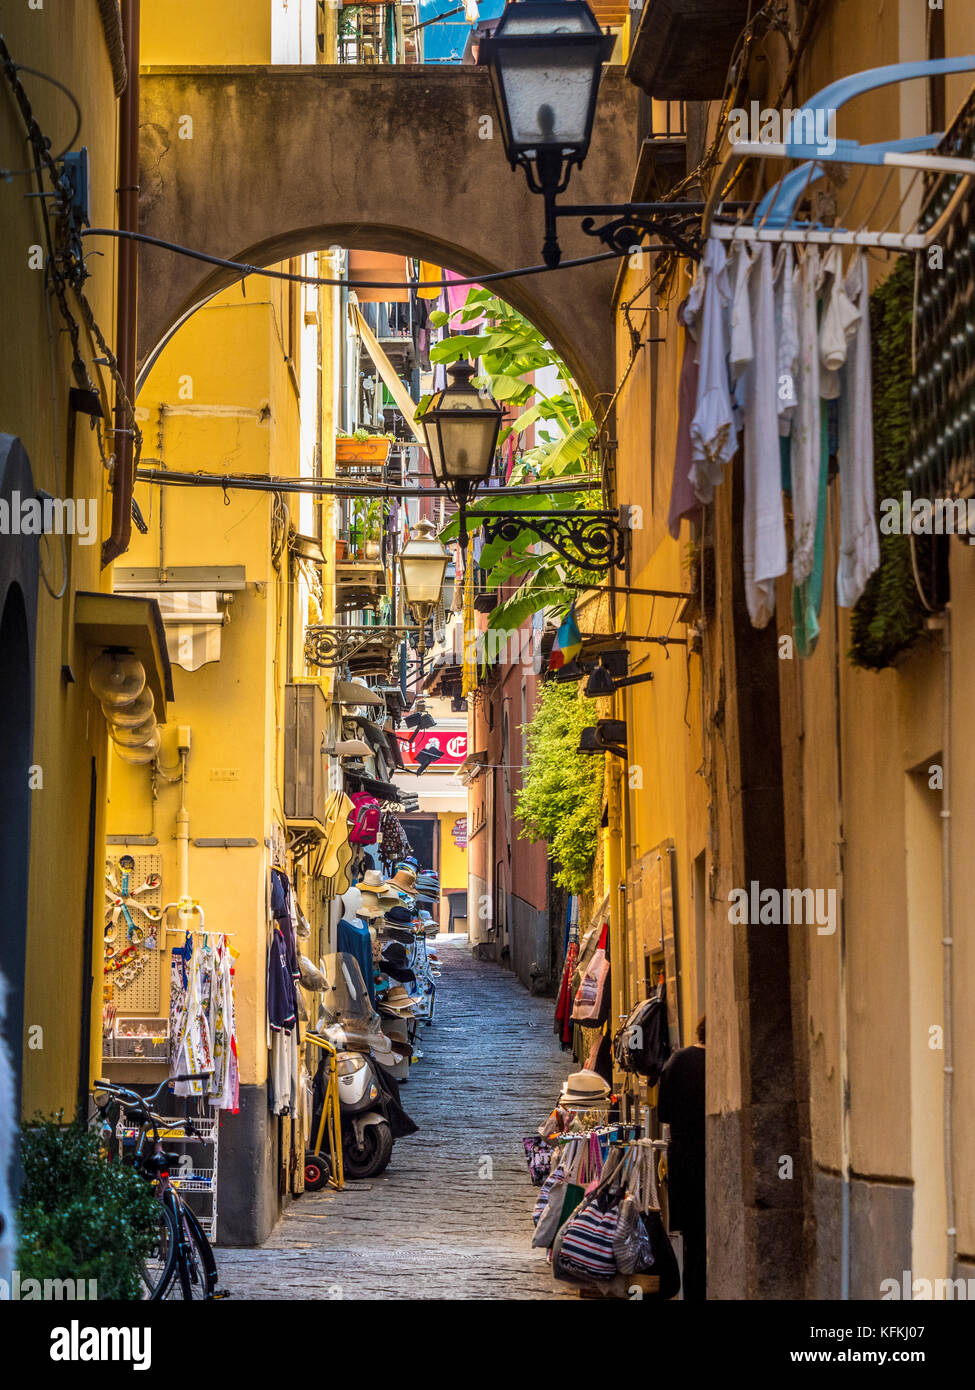 Side street off Corso Italia with tourist souvenir shops. Sorrento, Italy  Stock Photo - Alamy